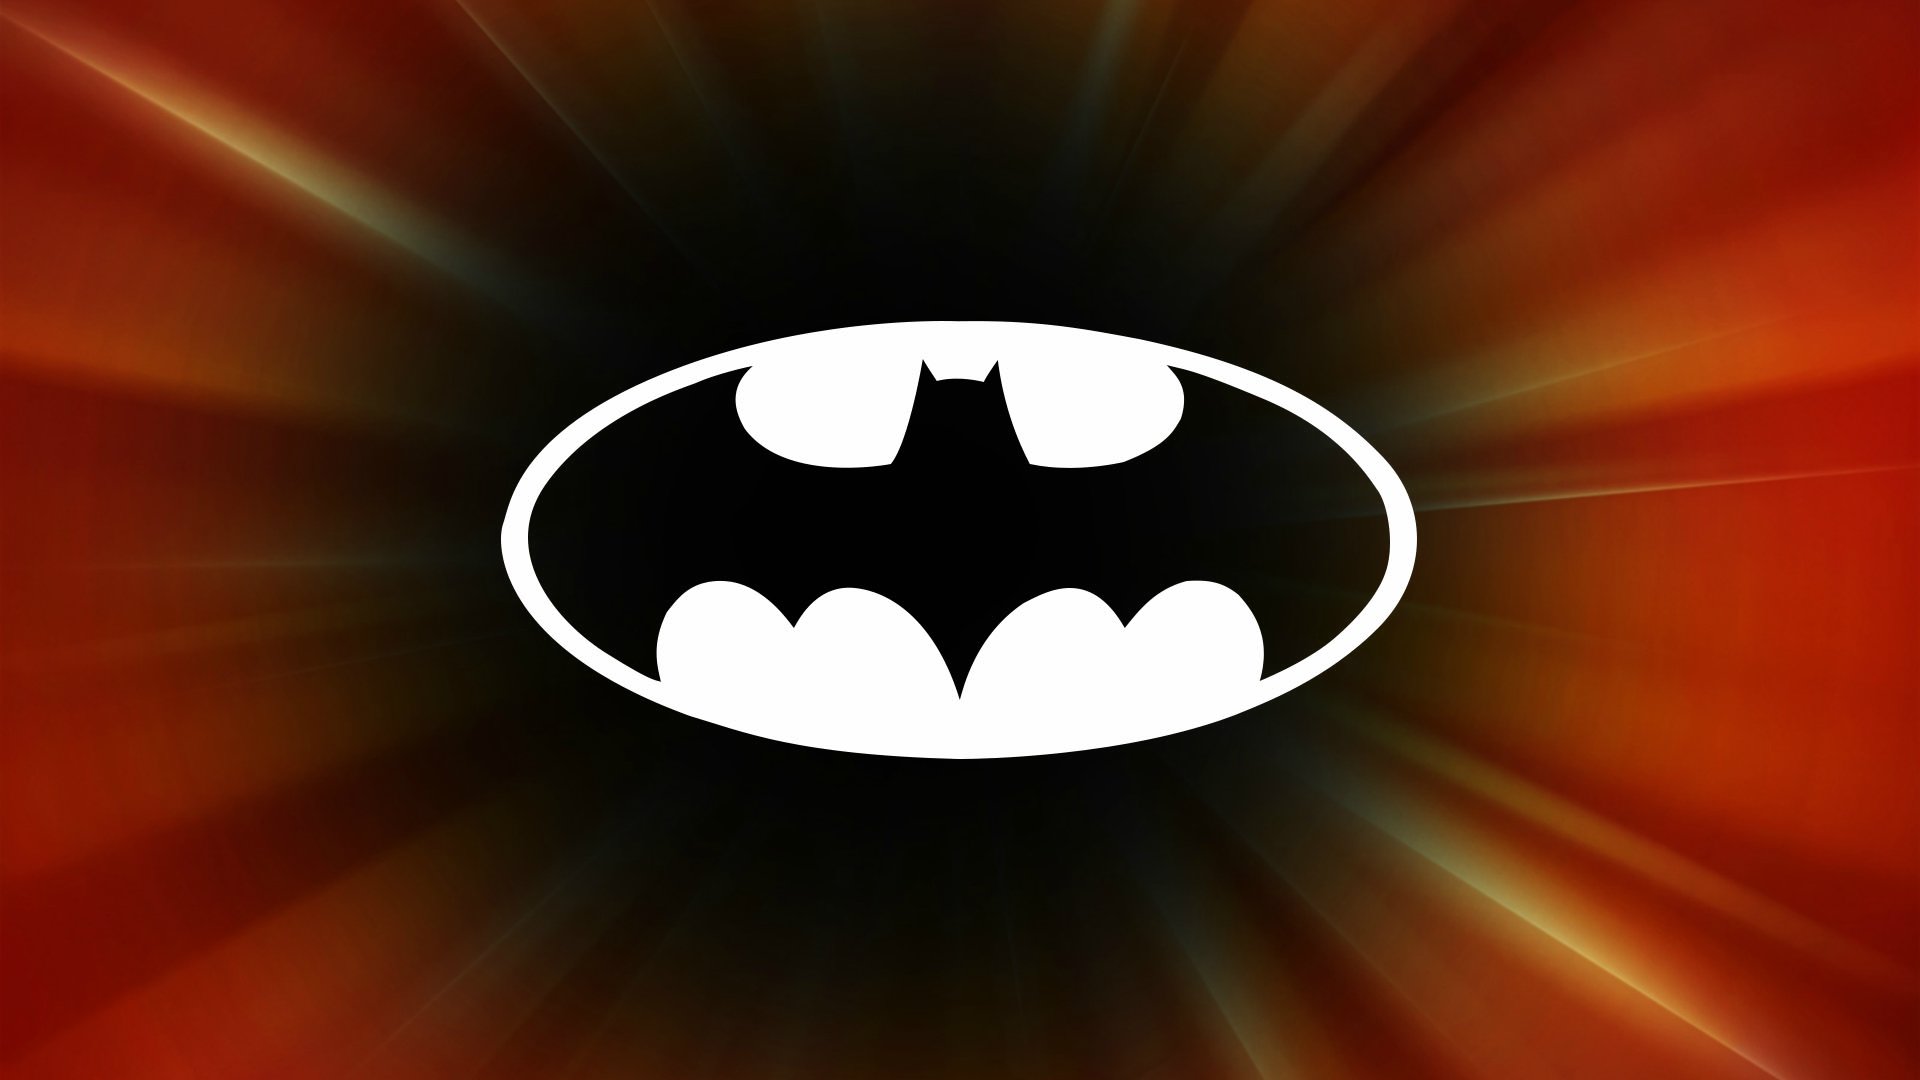 Best Batman Logo (Symbol) wallpaper ID:42440 for High Resolution full hd desktop